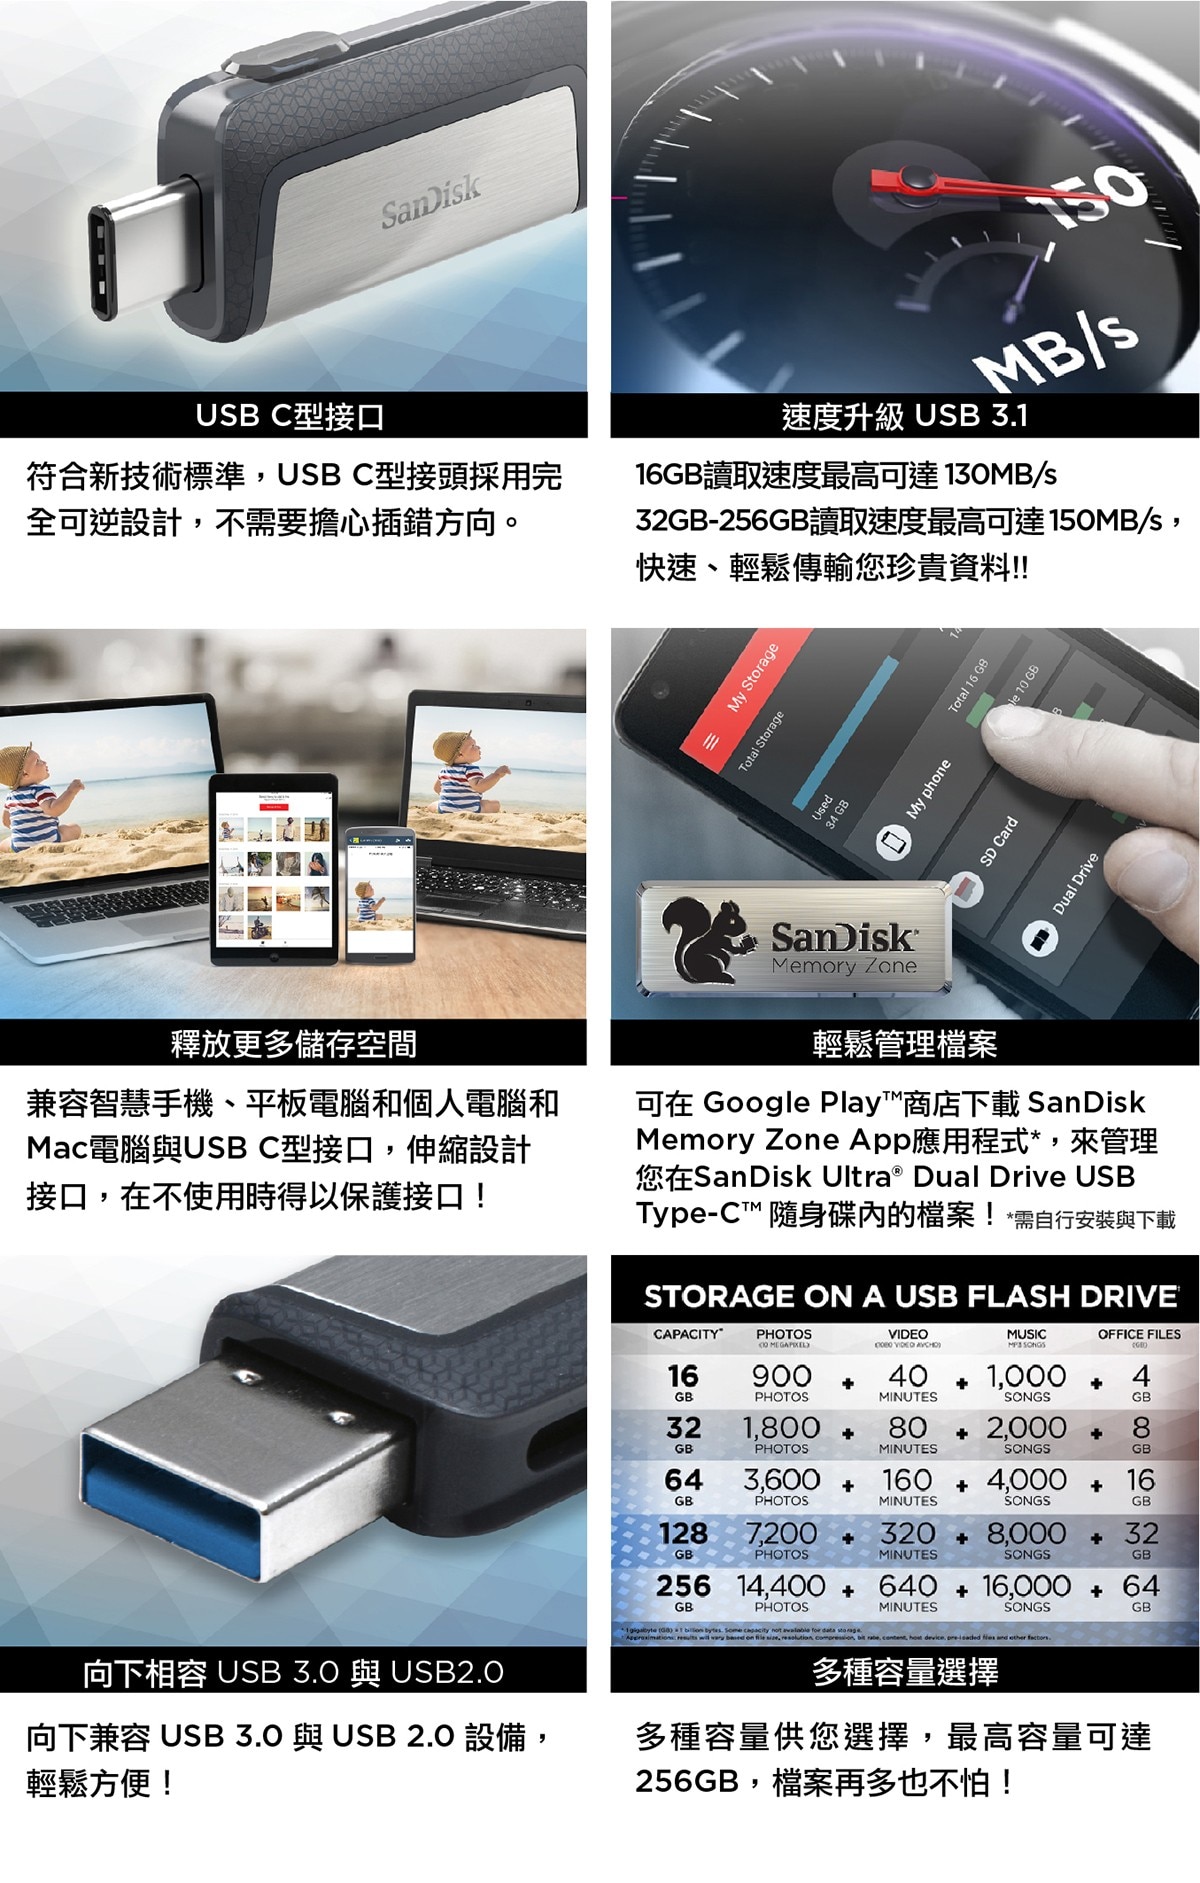 SanDisk Ultra Dual Drive USB Type-C,USB C型接口,速度升級USB3.1,釋放更多儲存空間,輕鬆管理檔案,向下相容USB3.0與USB2.0,多容量選擇.